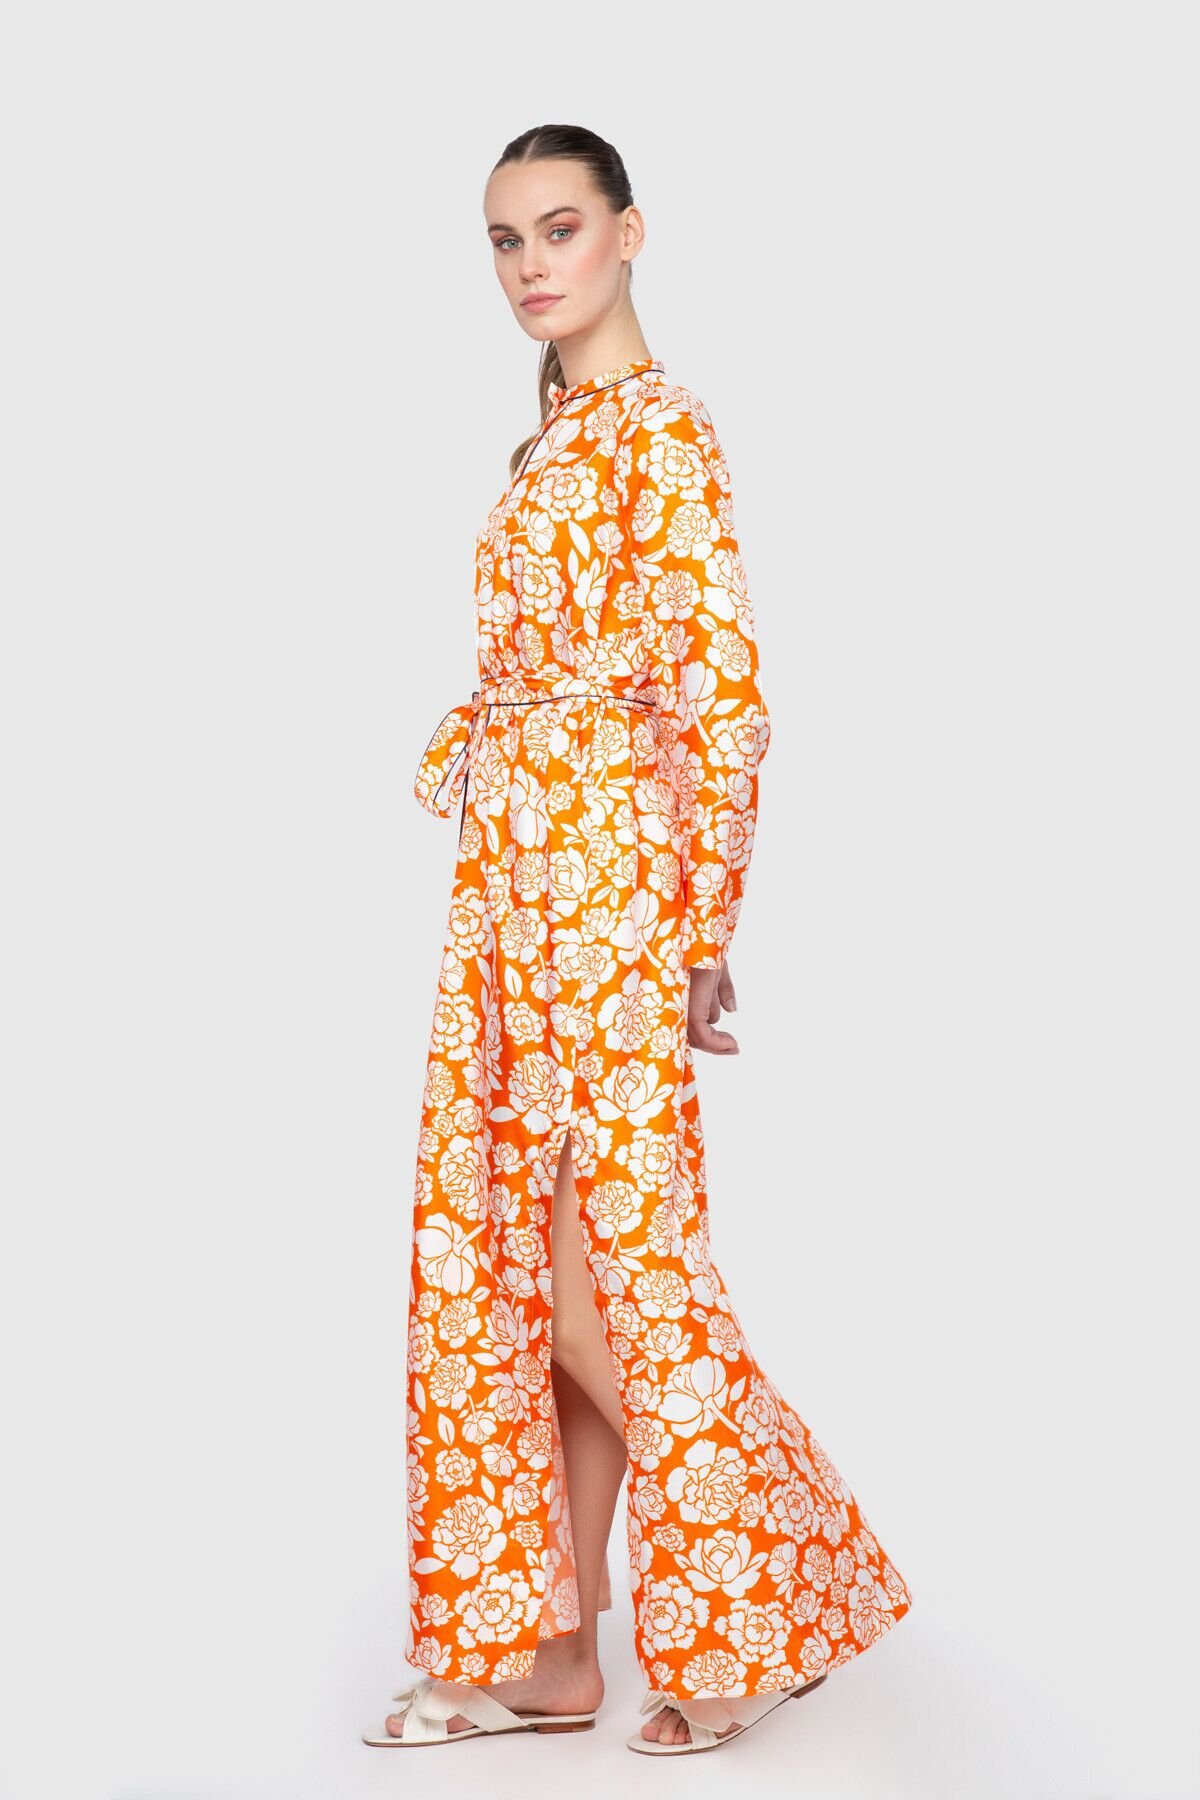 Floral Patterned Ankle-Length Dress